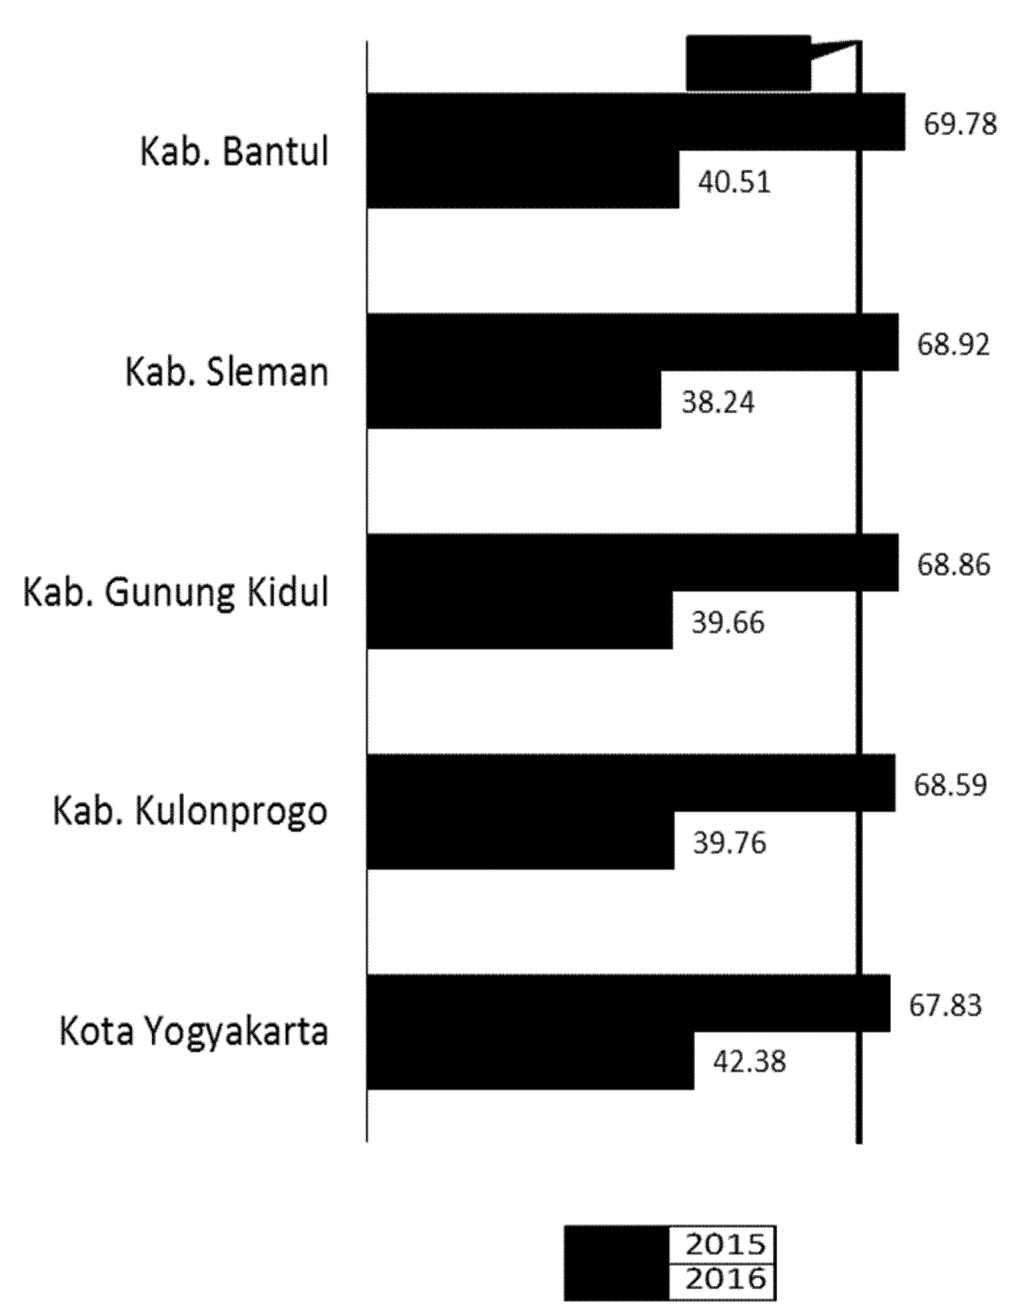 RERATA POST TEST (UKG II) KAB/KOTA DI PROVINSI DI YOGYAKARTA No Kab./Kota Jmh. Peserta Jmh. Org. Modul Total 2015 Total 1 Kota Yogyakarta 1,524 2,862 42.38 67.